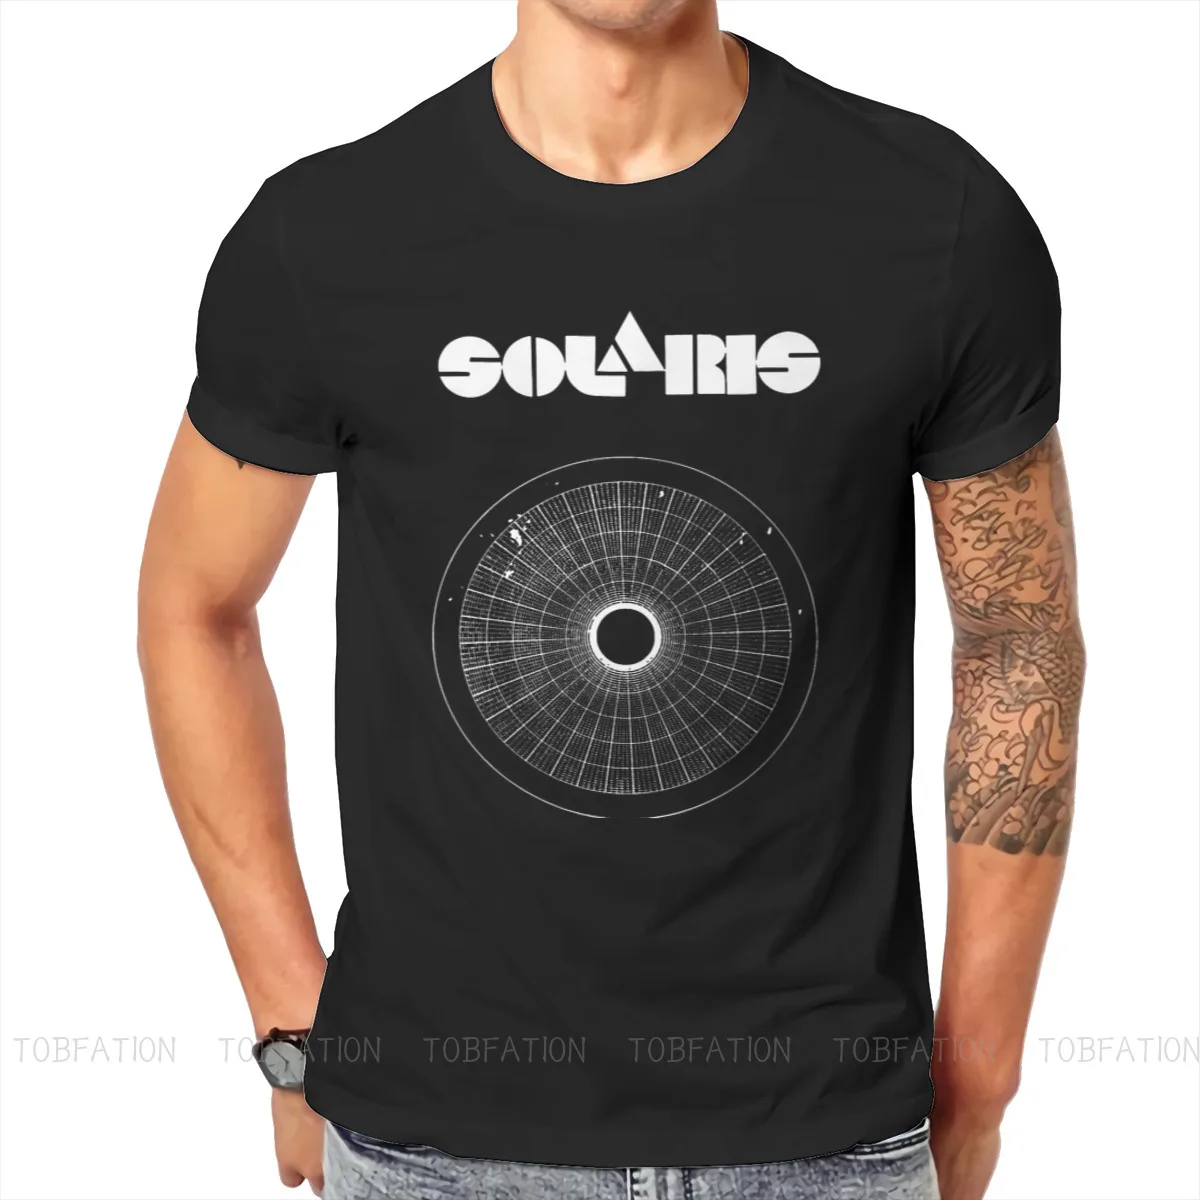 

Andrei Tarkovskys Solaris TShirt For Male Stalker 1979 Film Clothing Fashion T Shirt Soft Printed Fluffy